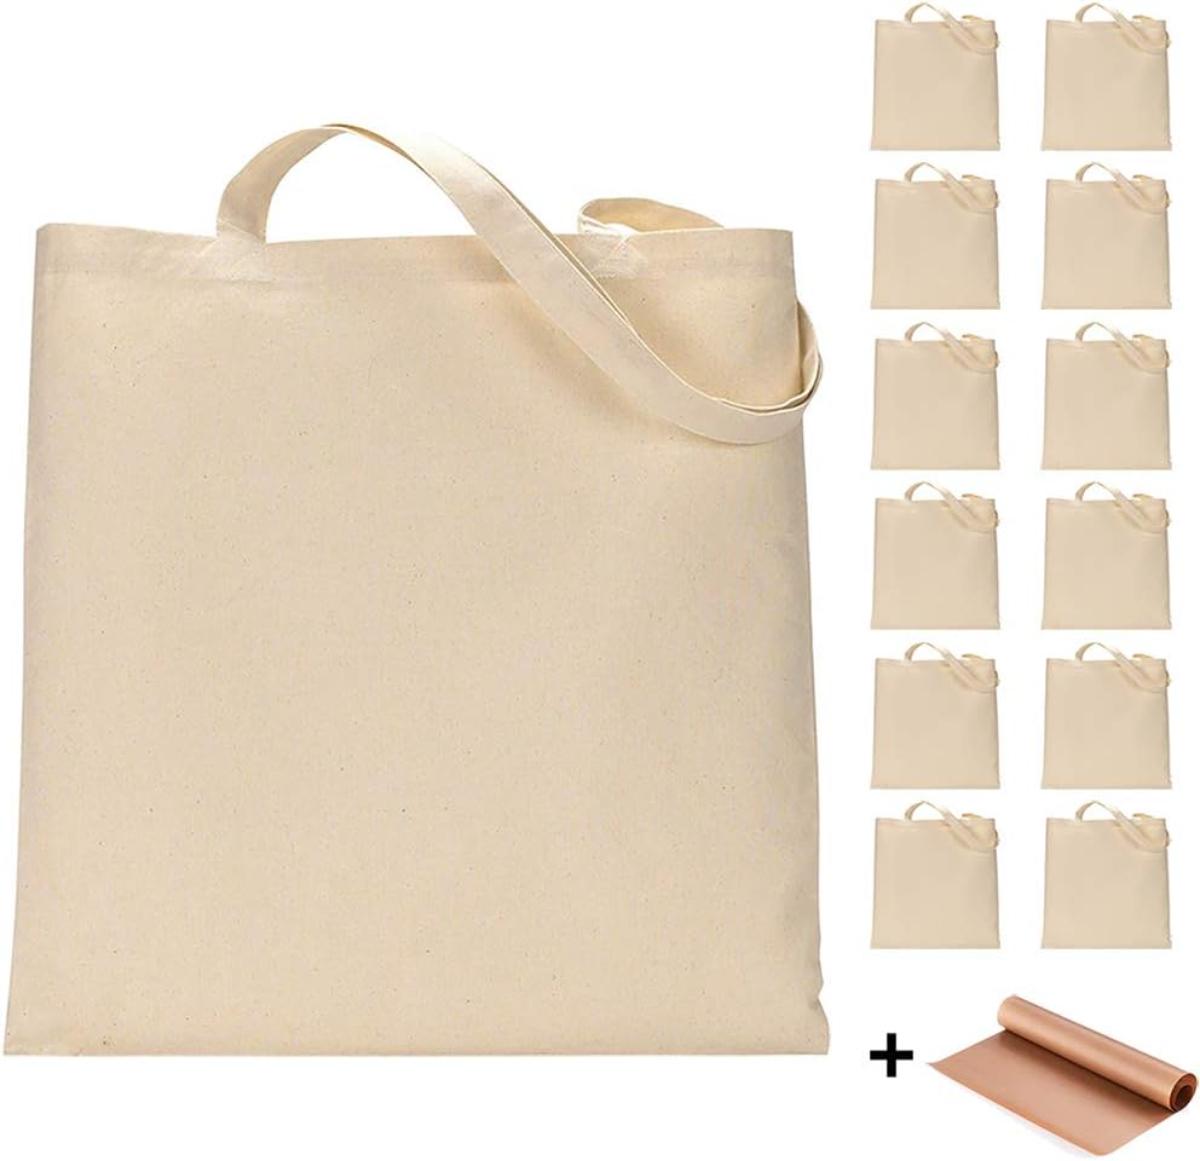 Funisfun 12 Pack Blank Canvas Tote Bags